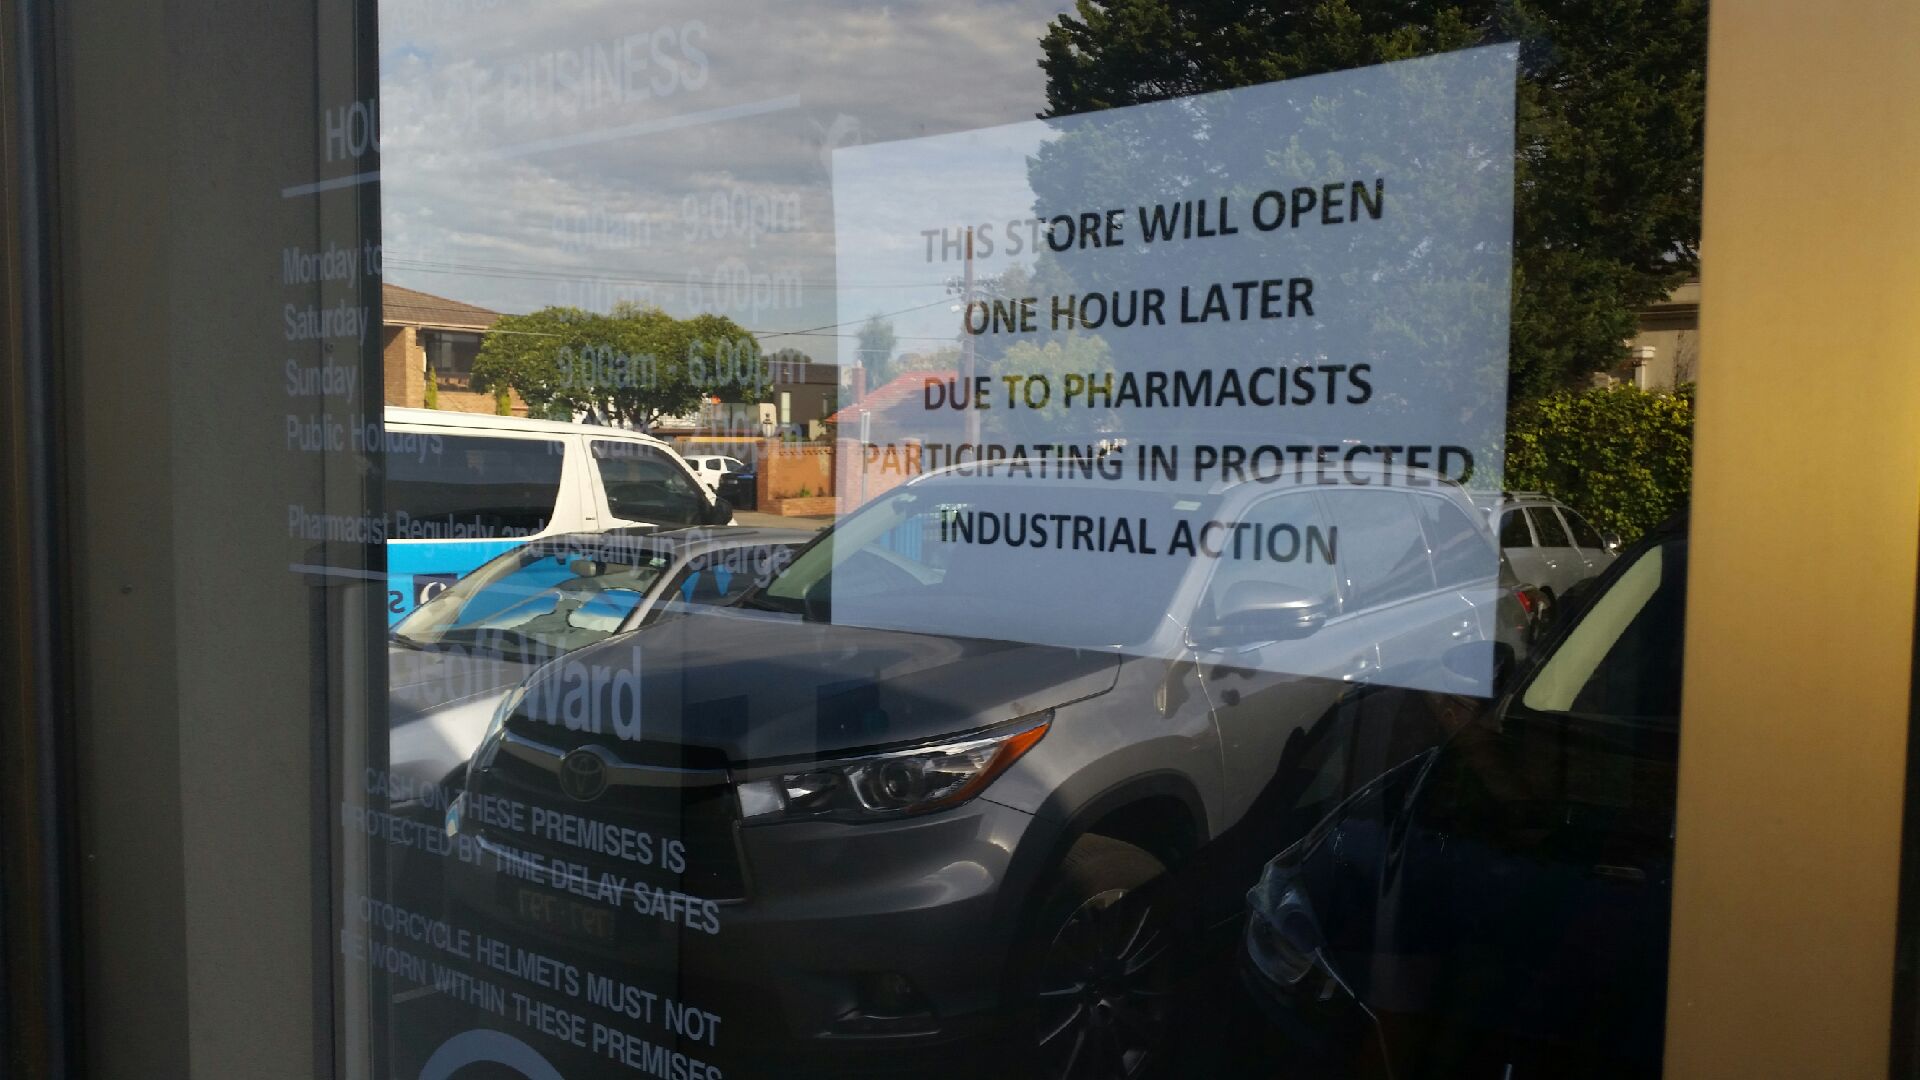 National Pharmacies window sign